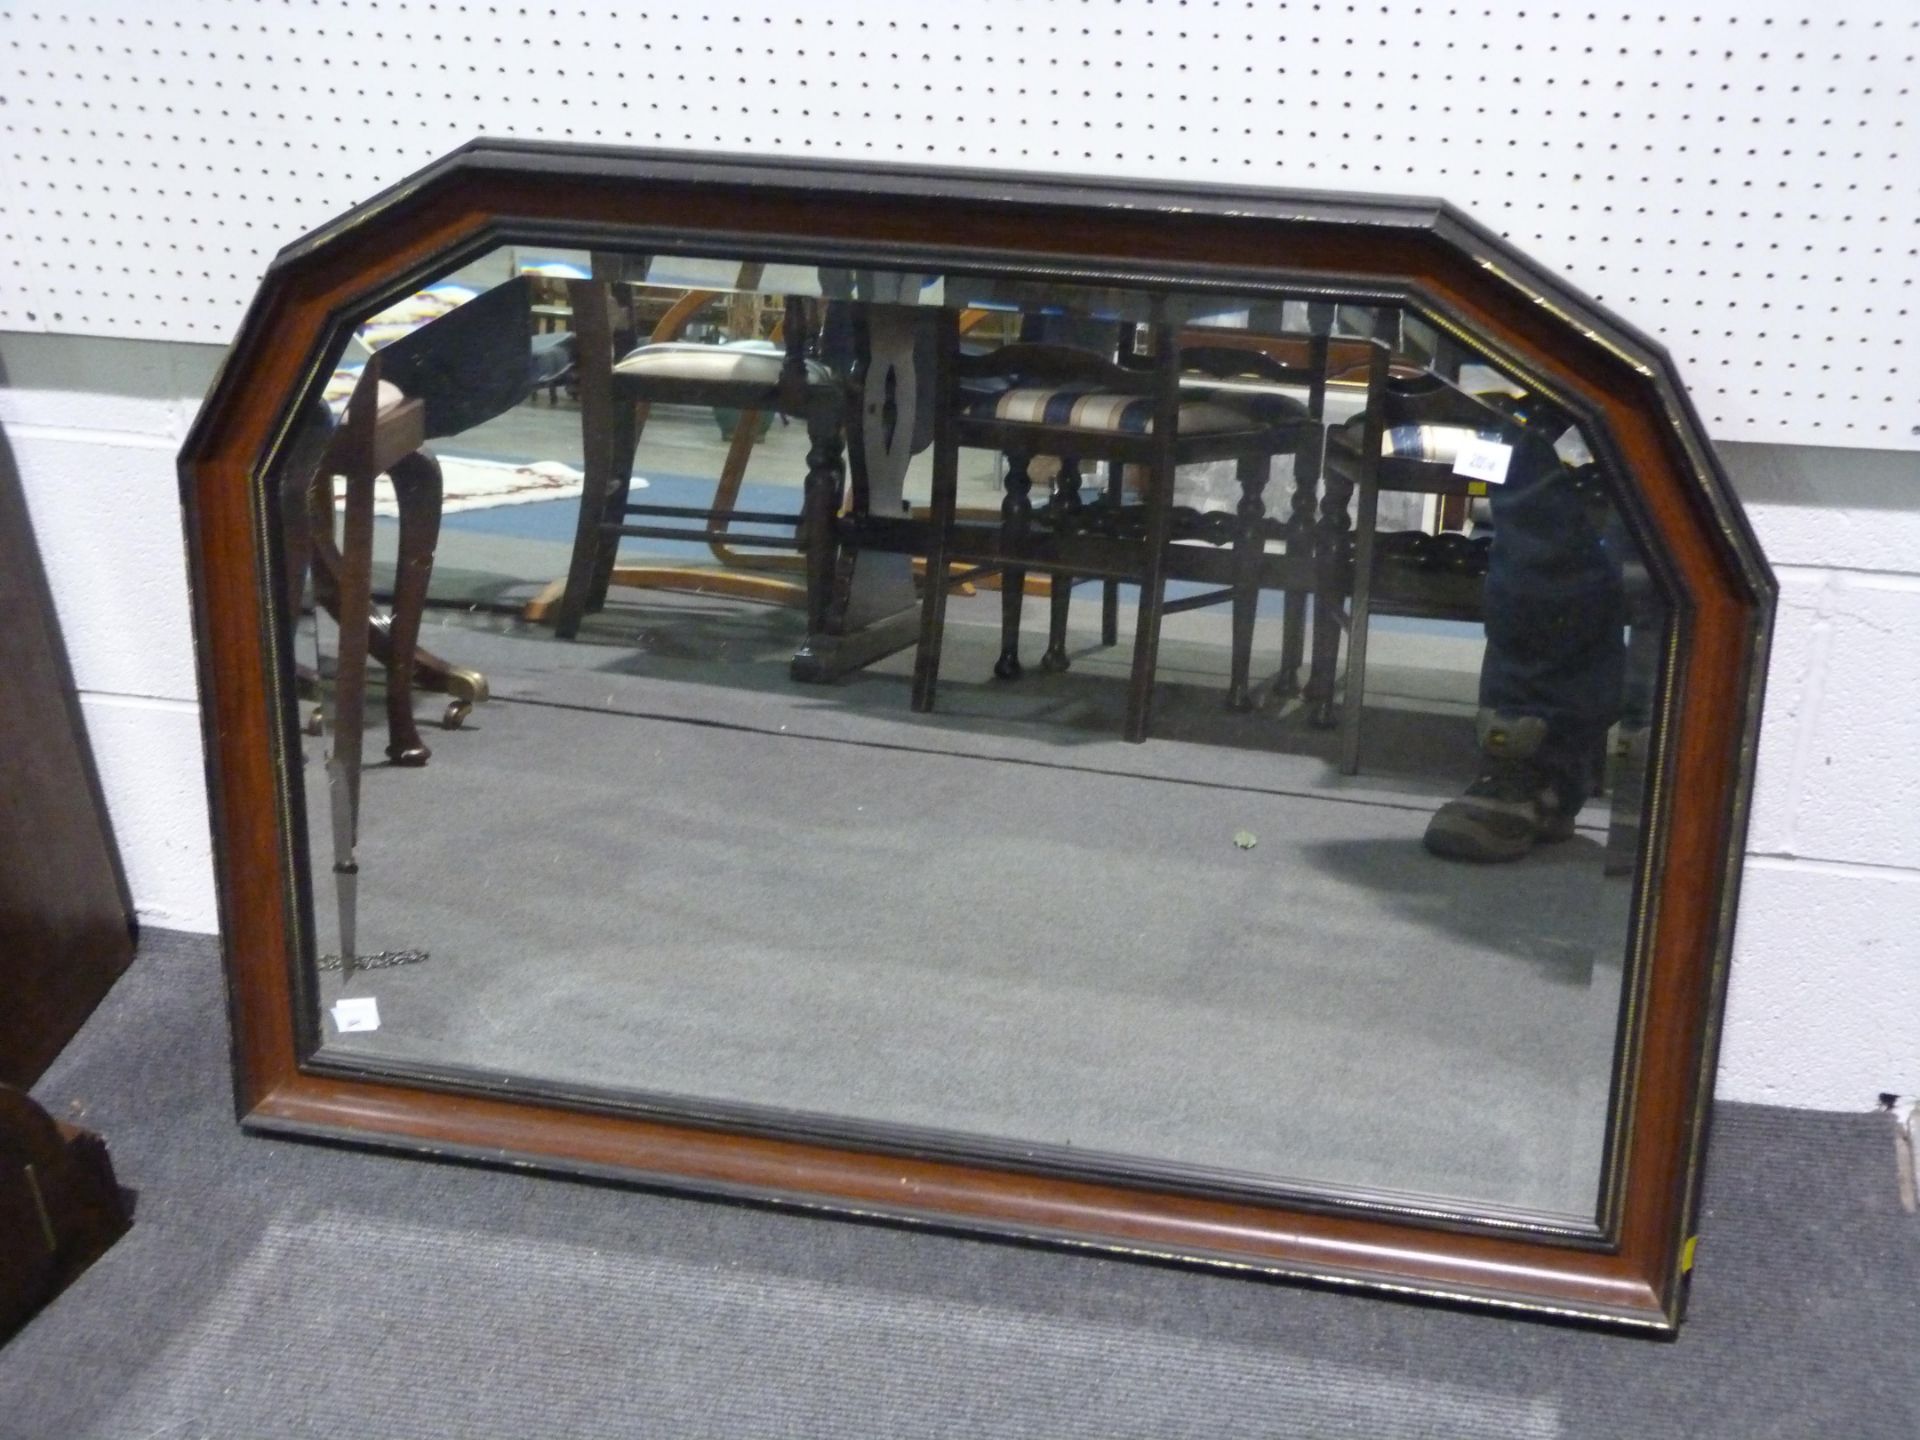 A Shaped Bevelled Hall Mirror in Wooden Frame (H 72cm, W 102cm, D 4cm) (est. £20-£40)